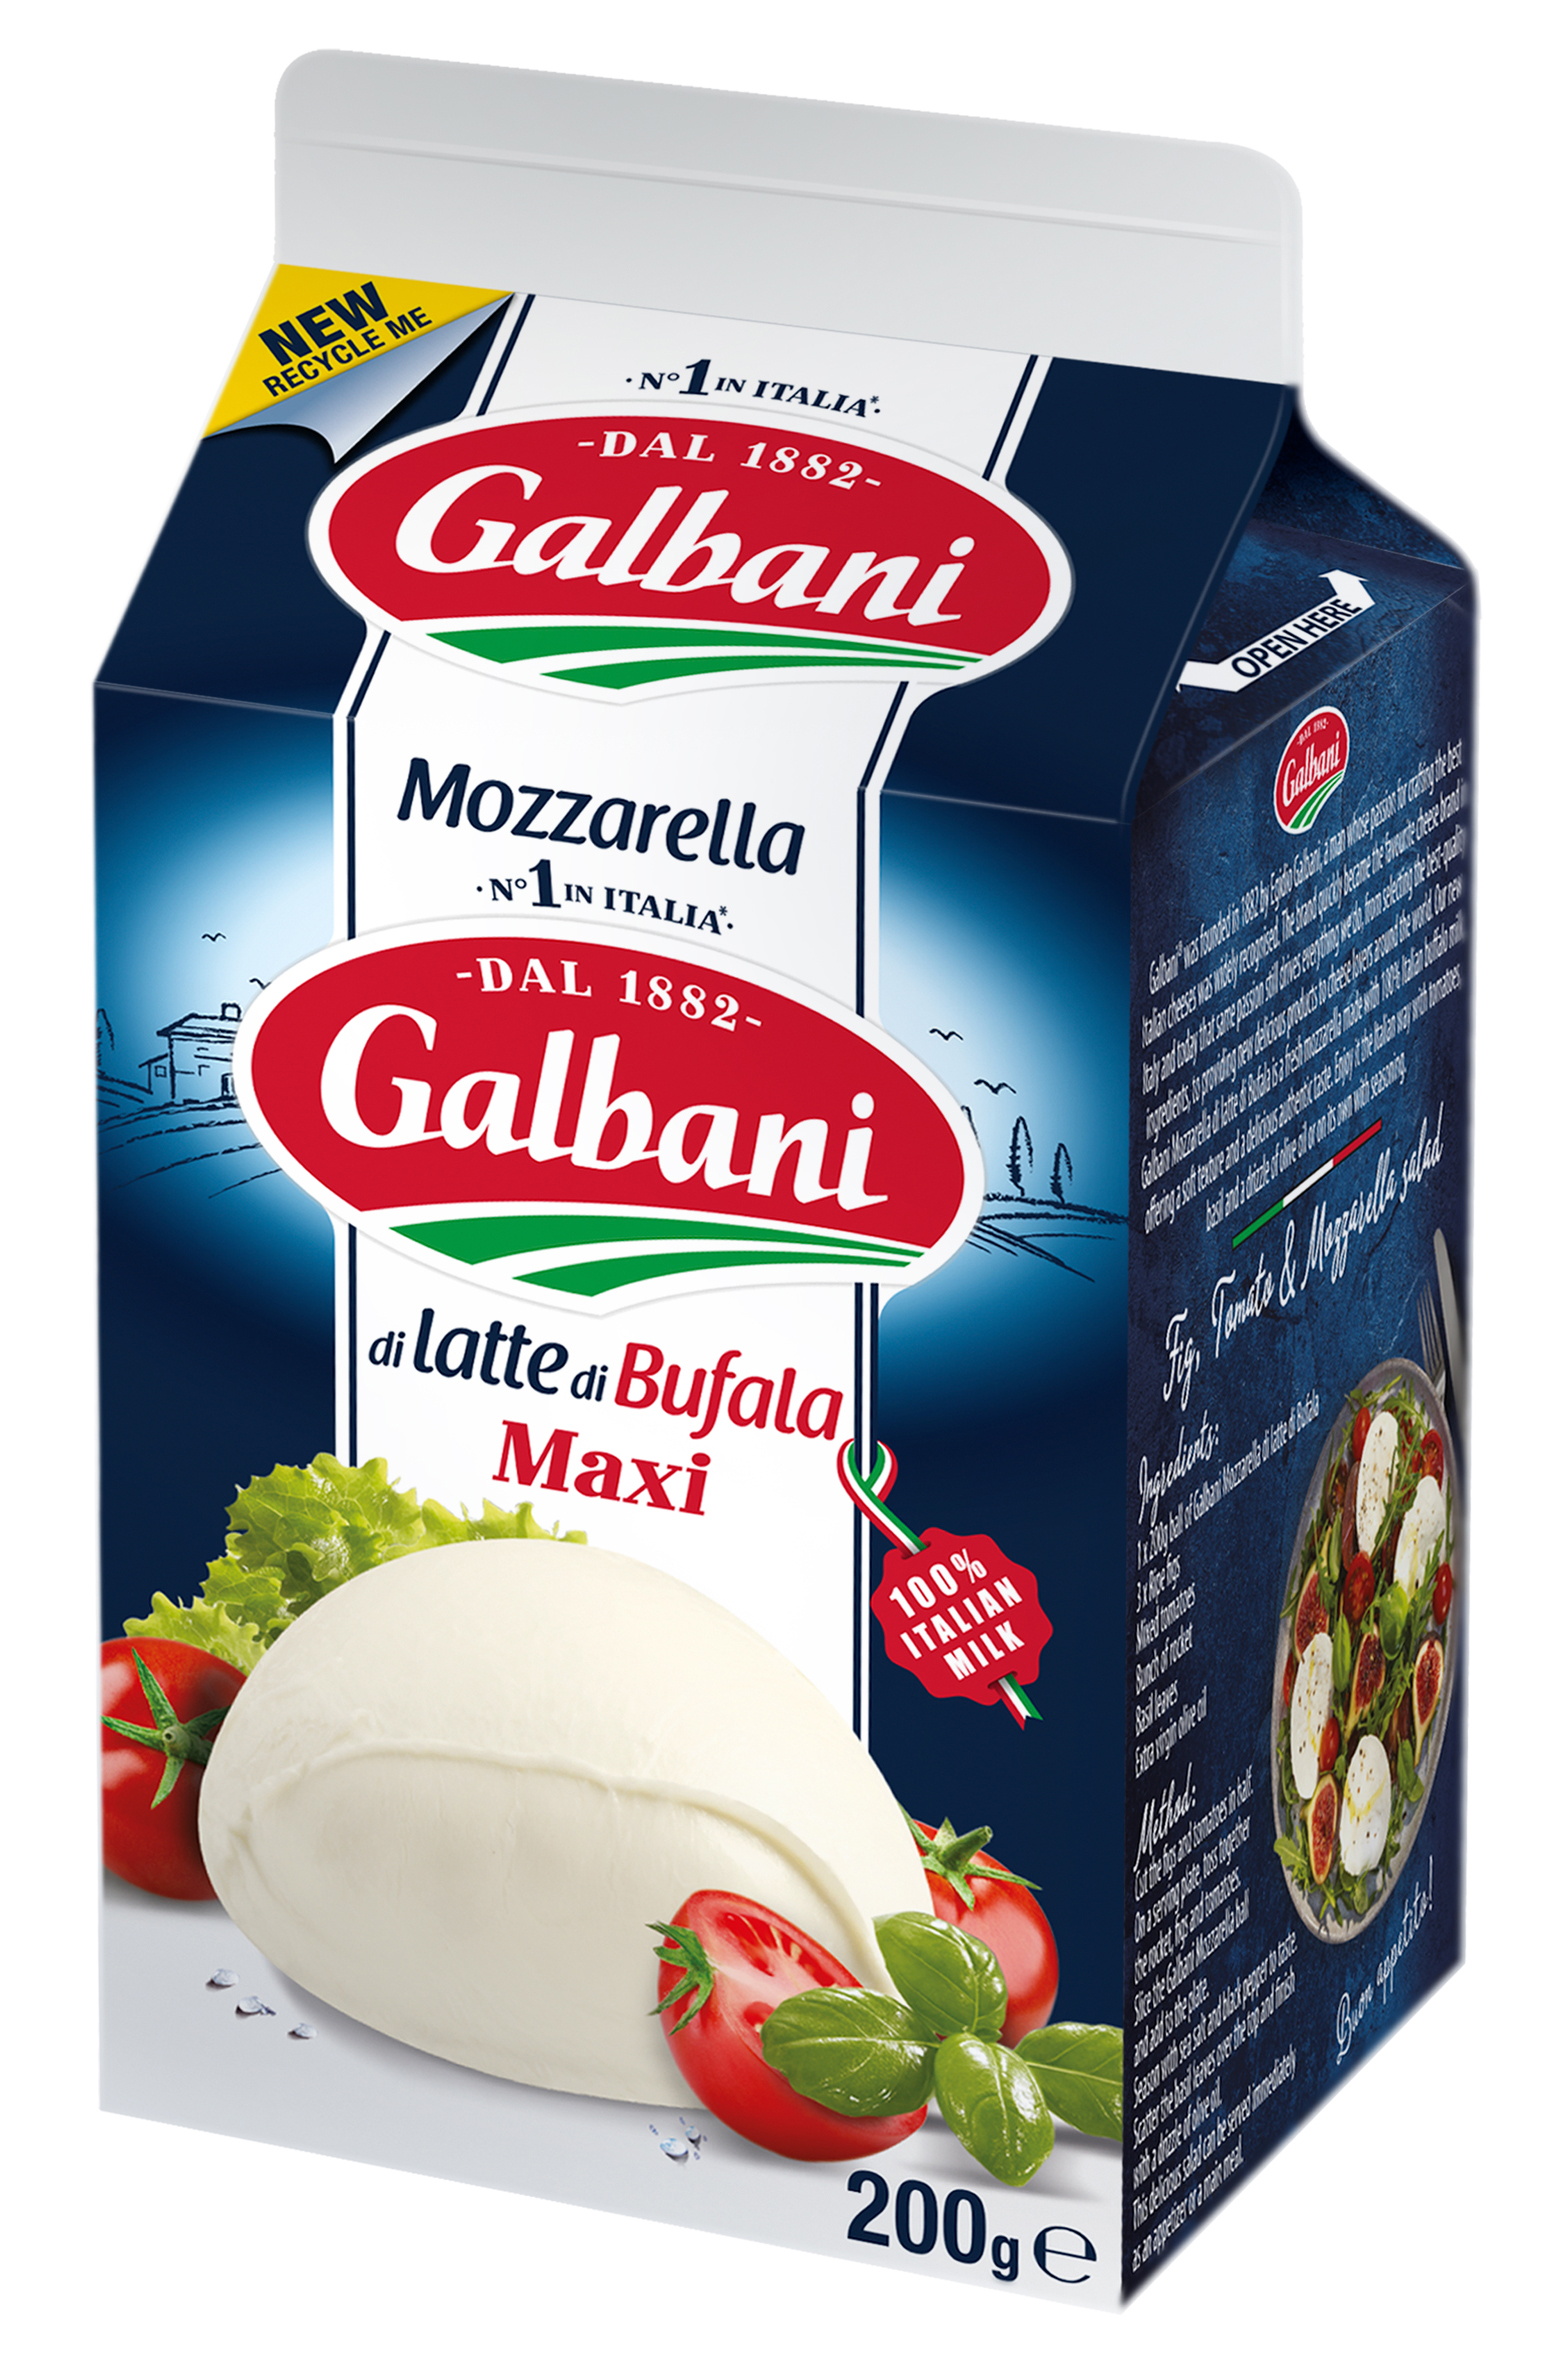 New Galbani Mozzarella set to make summer BBQs sizzle